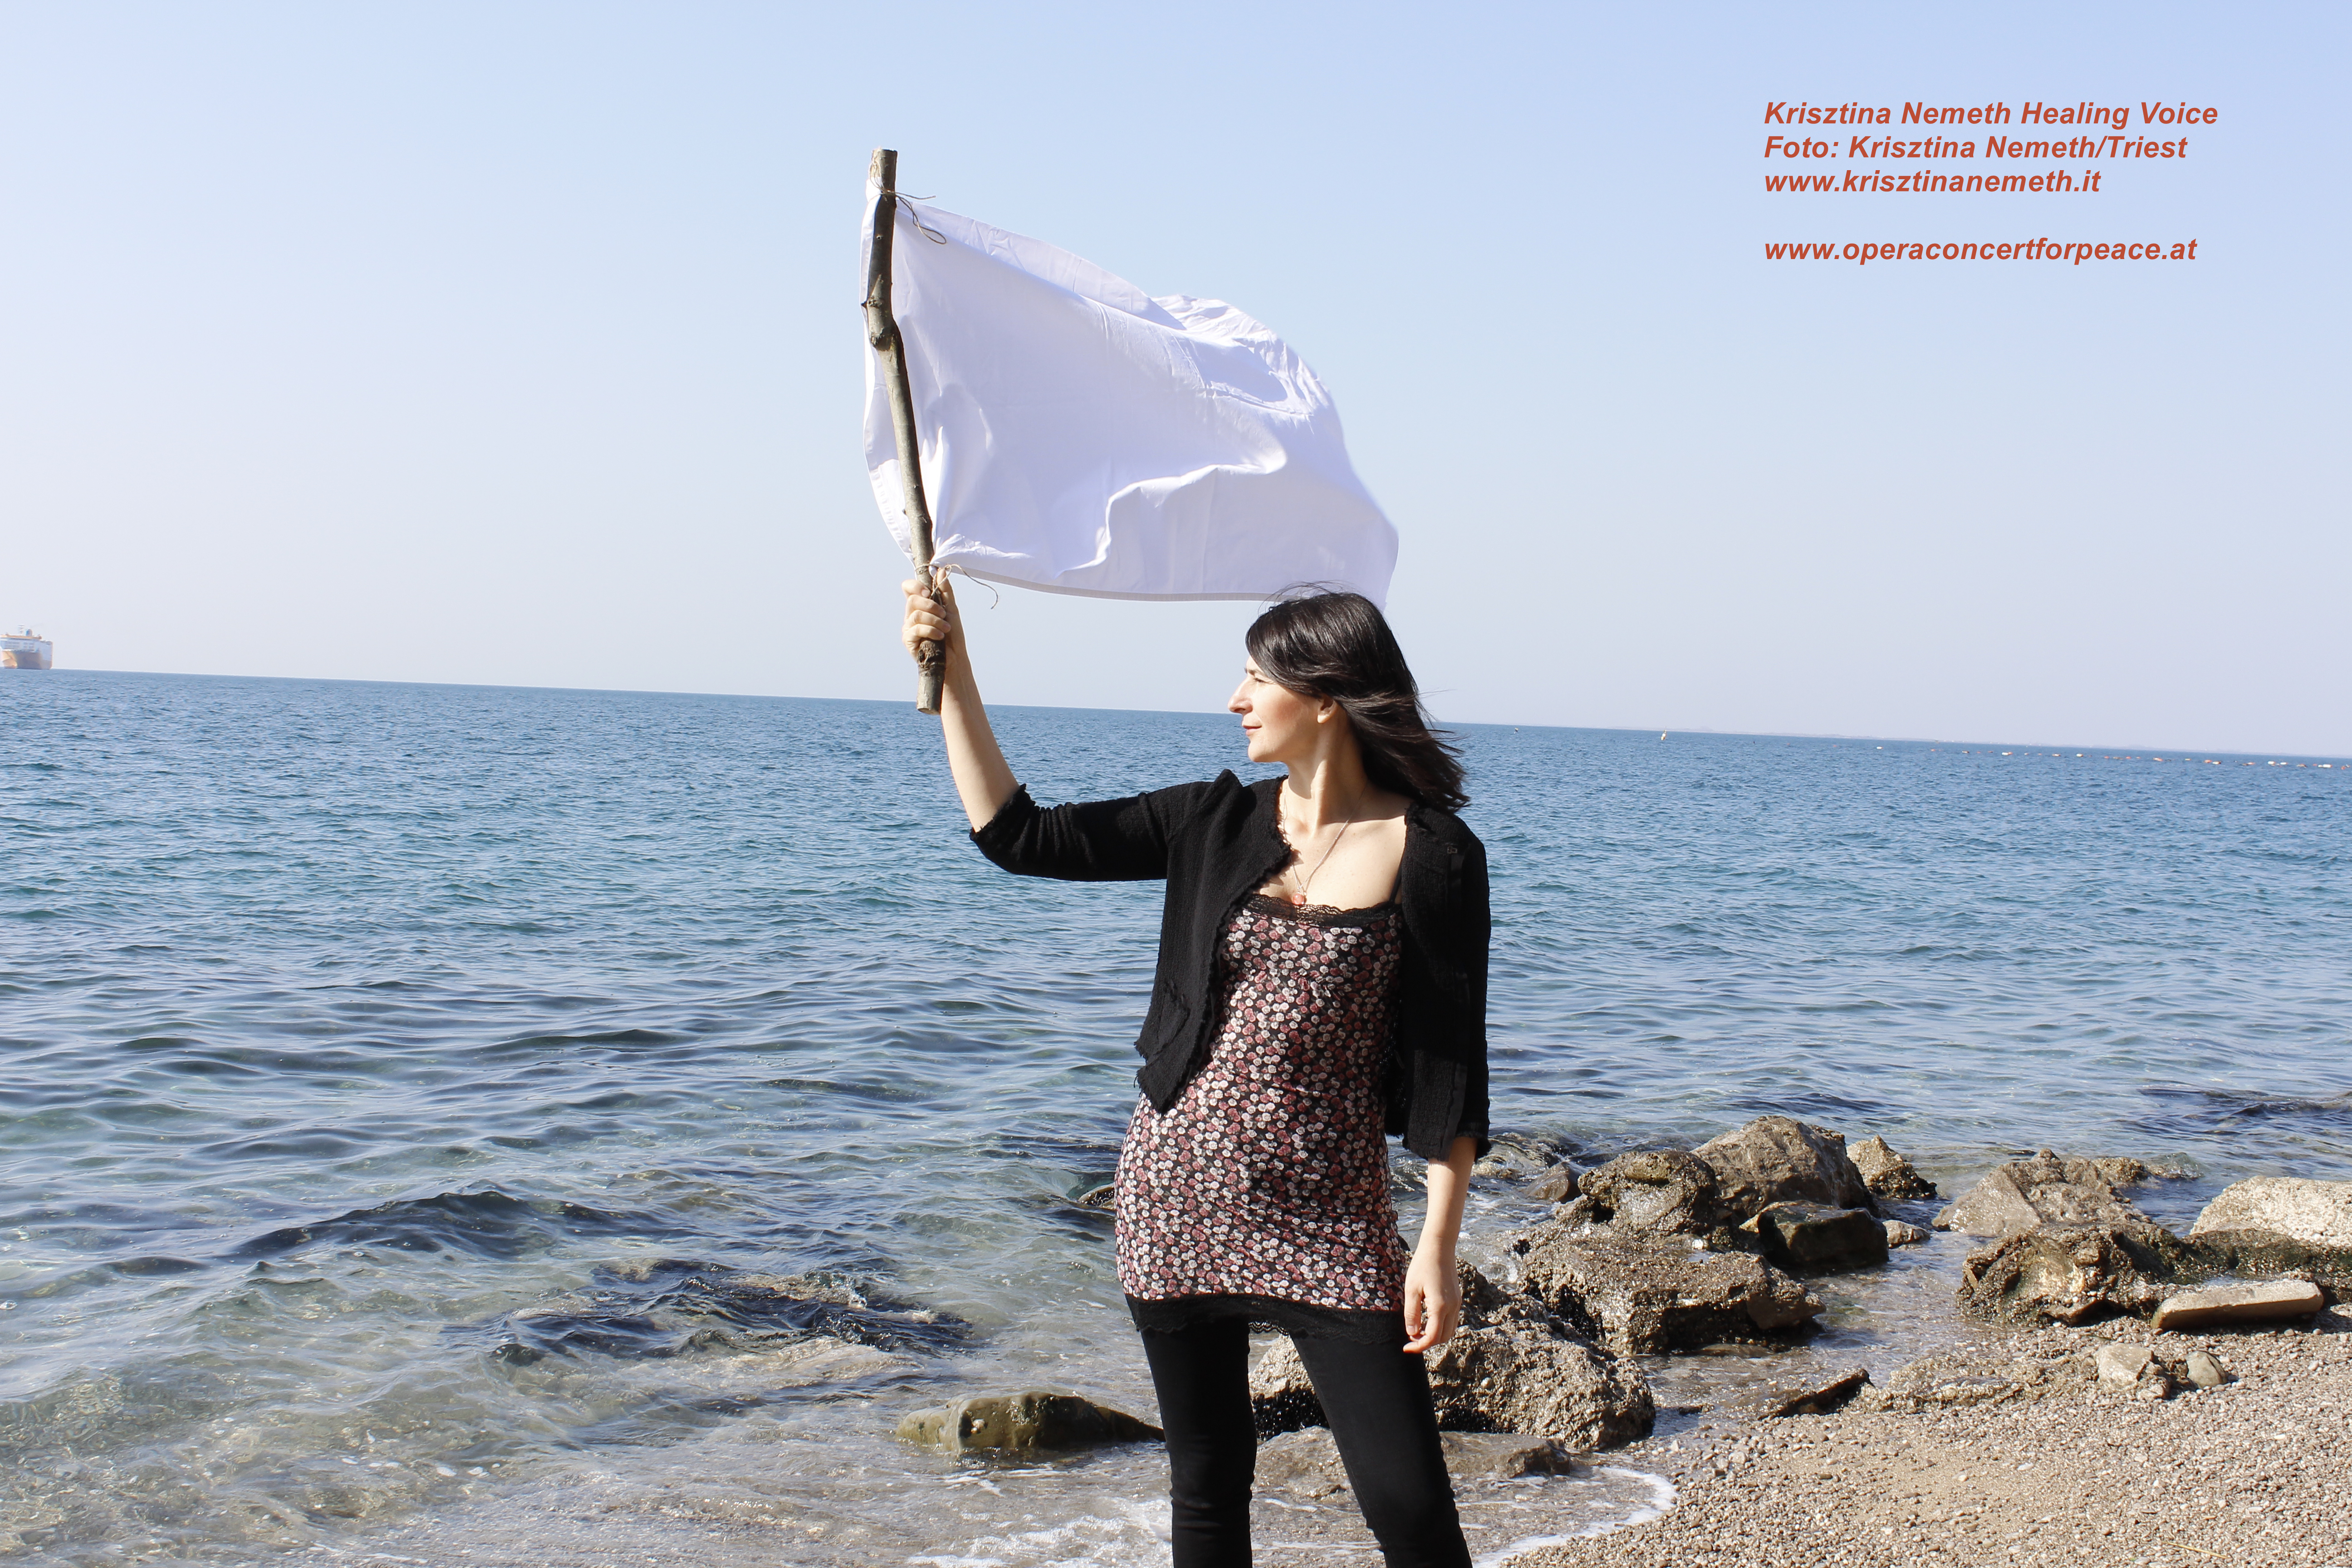 Krisztina Nemeth wave the Peaceflag in Triest. Grazie mille a Trieste.﻿